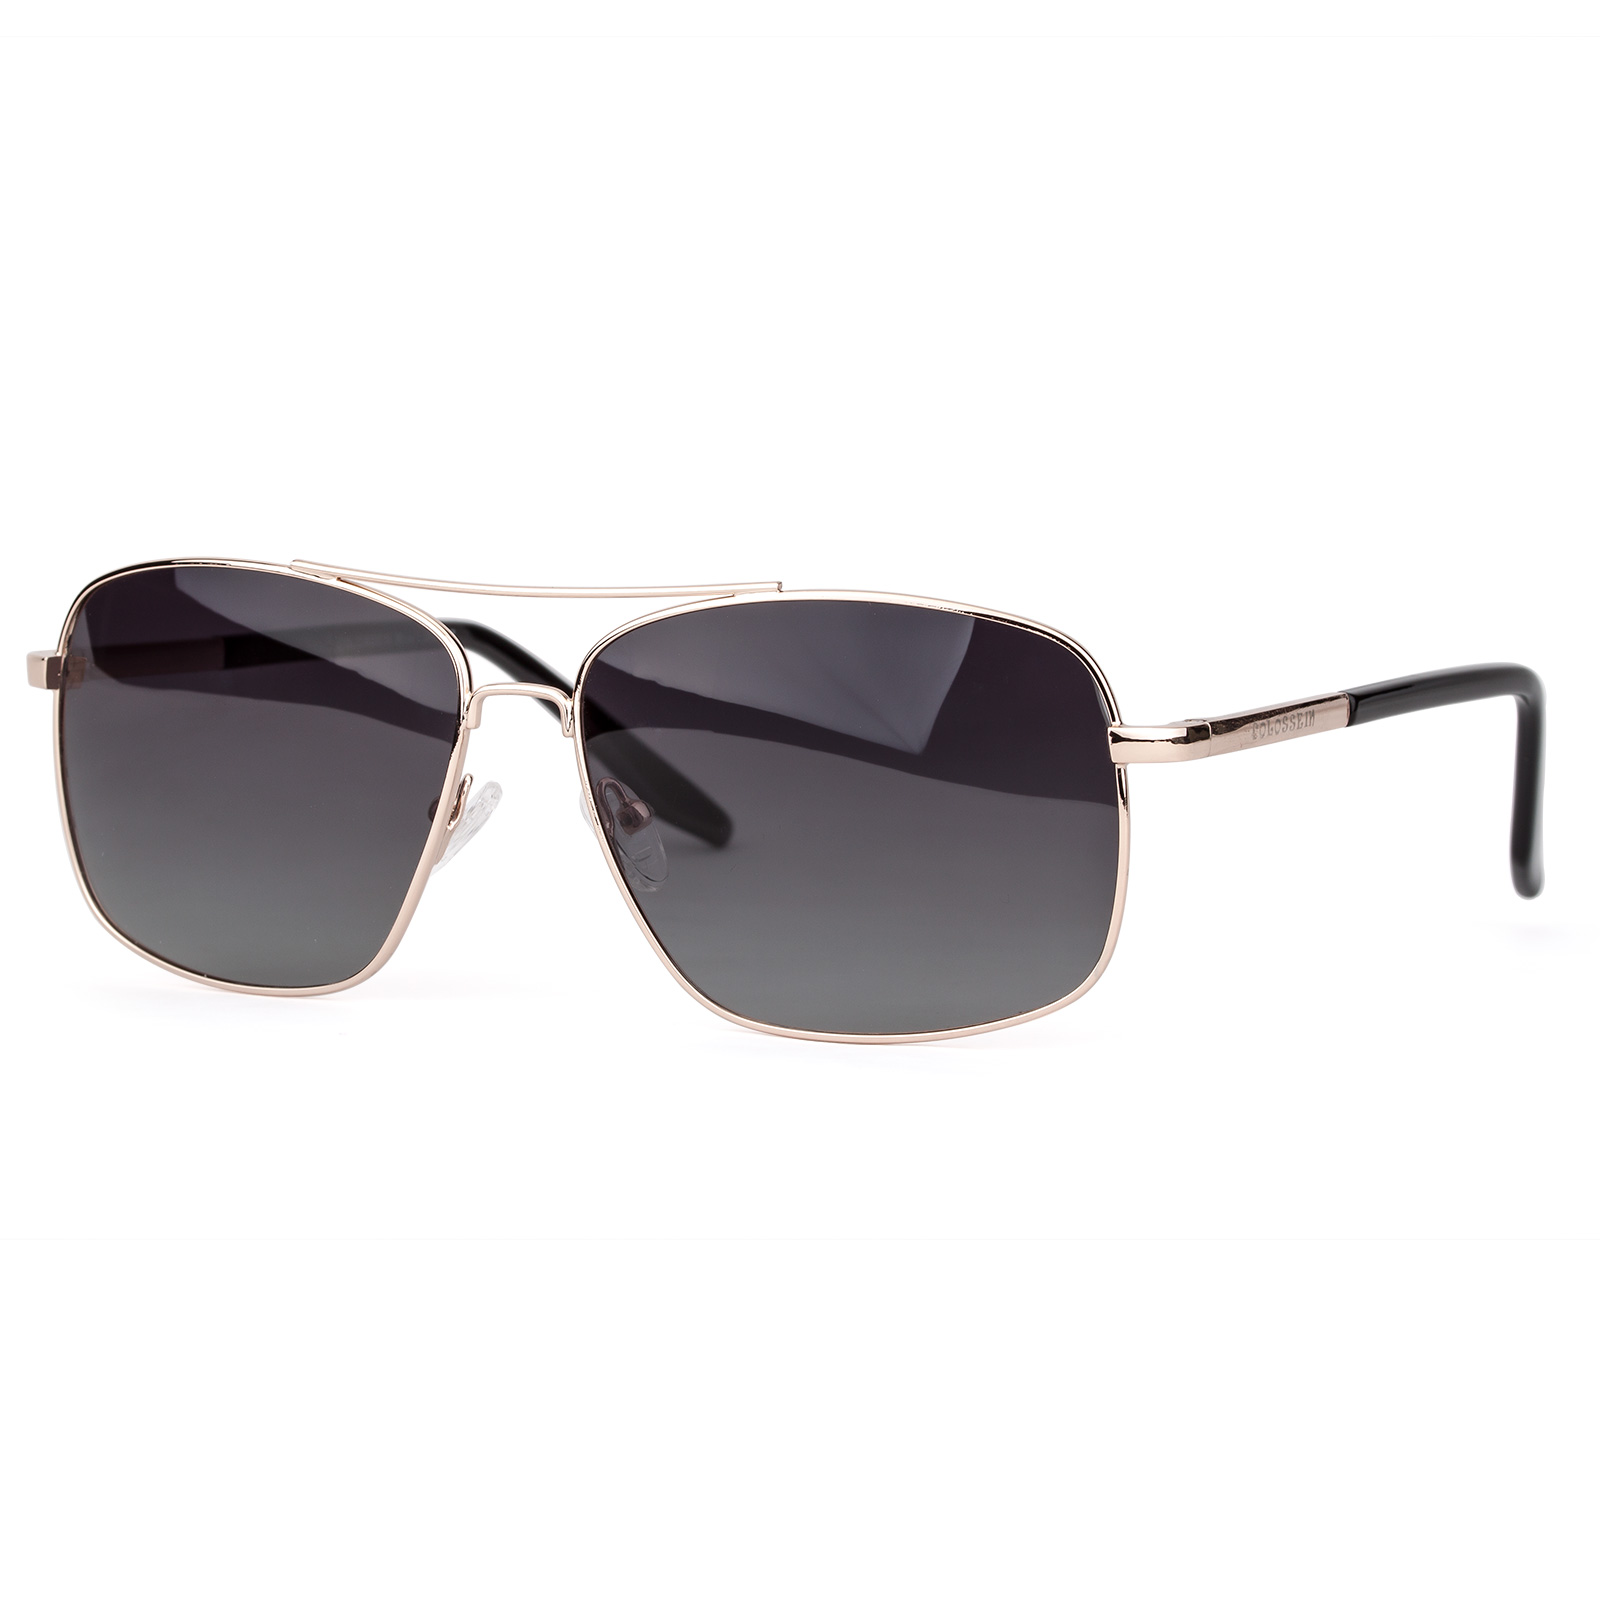 Square Aviator Sunglasses for Men Women Polarized UV Protection Classic Retro Rectangular Metal Frame